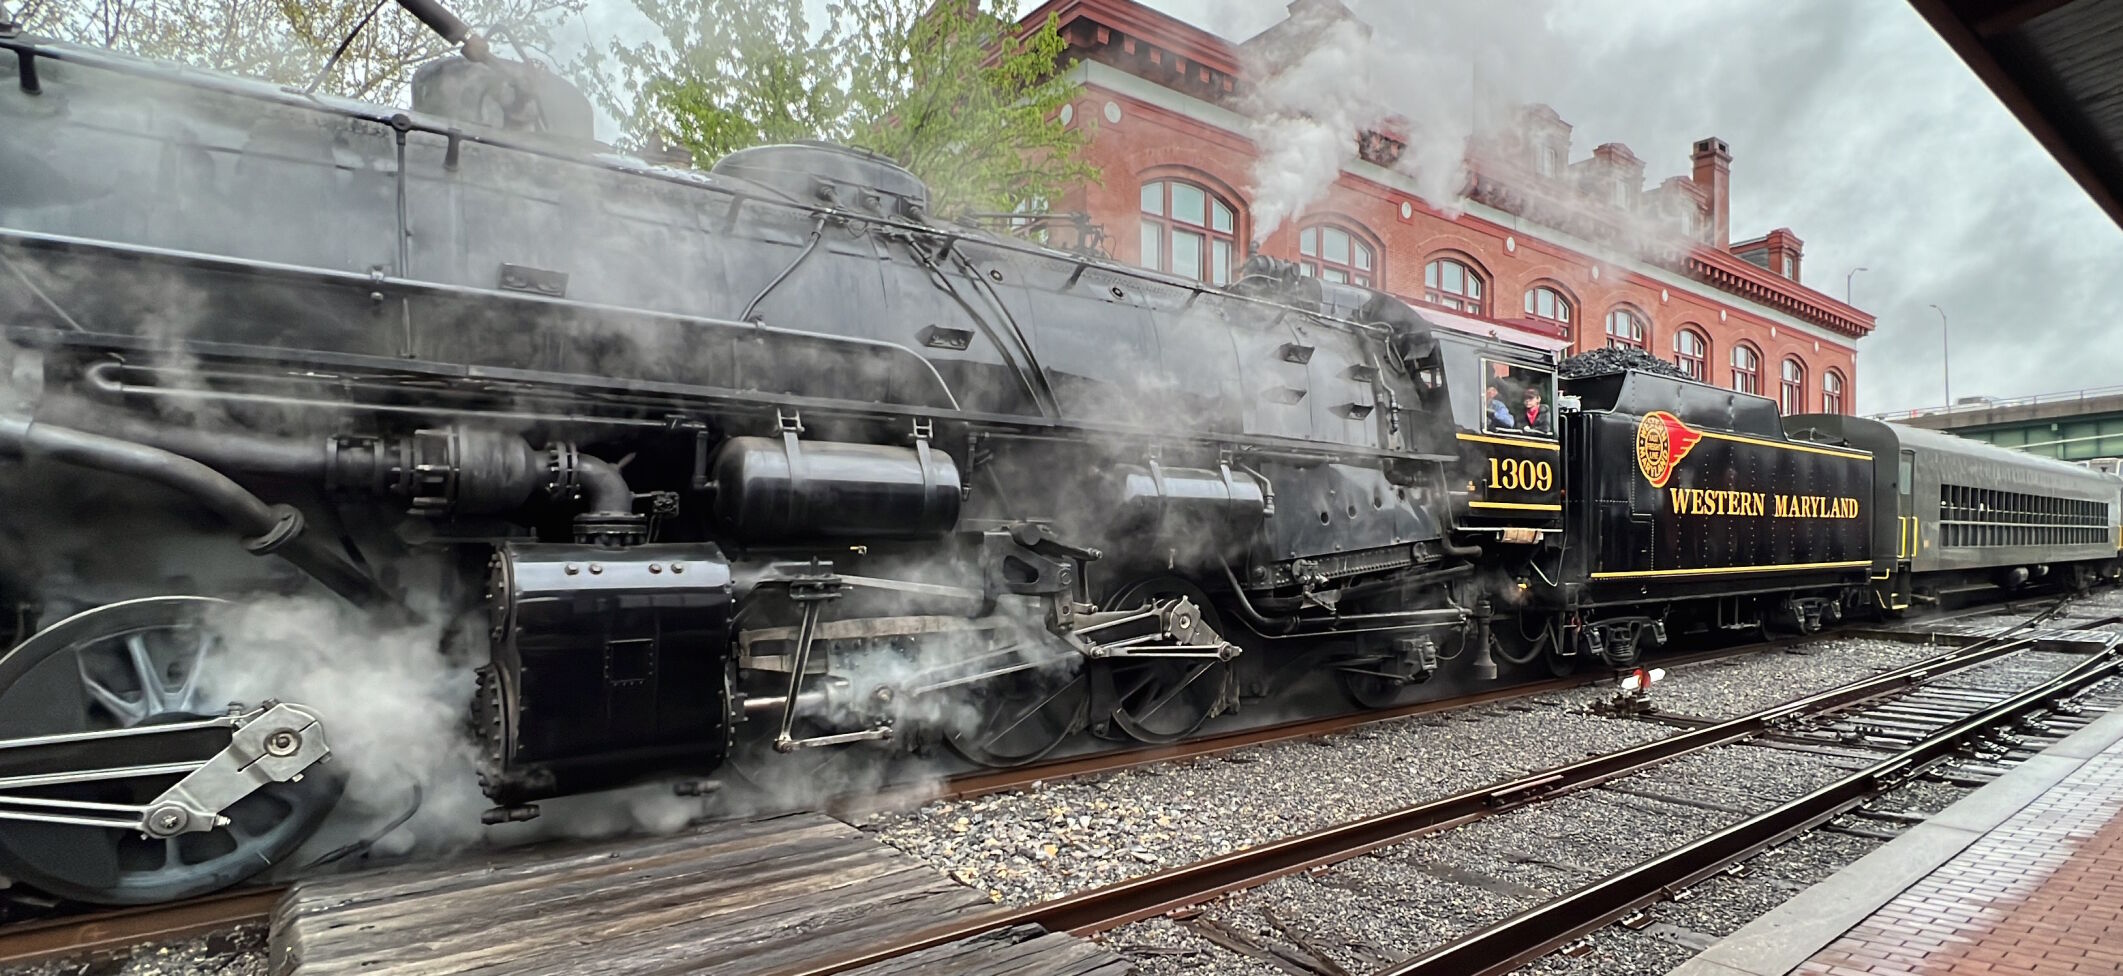 WMSR steam engine derailed for maintenance | News | times-news.com